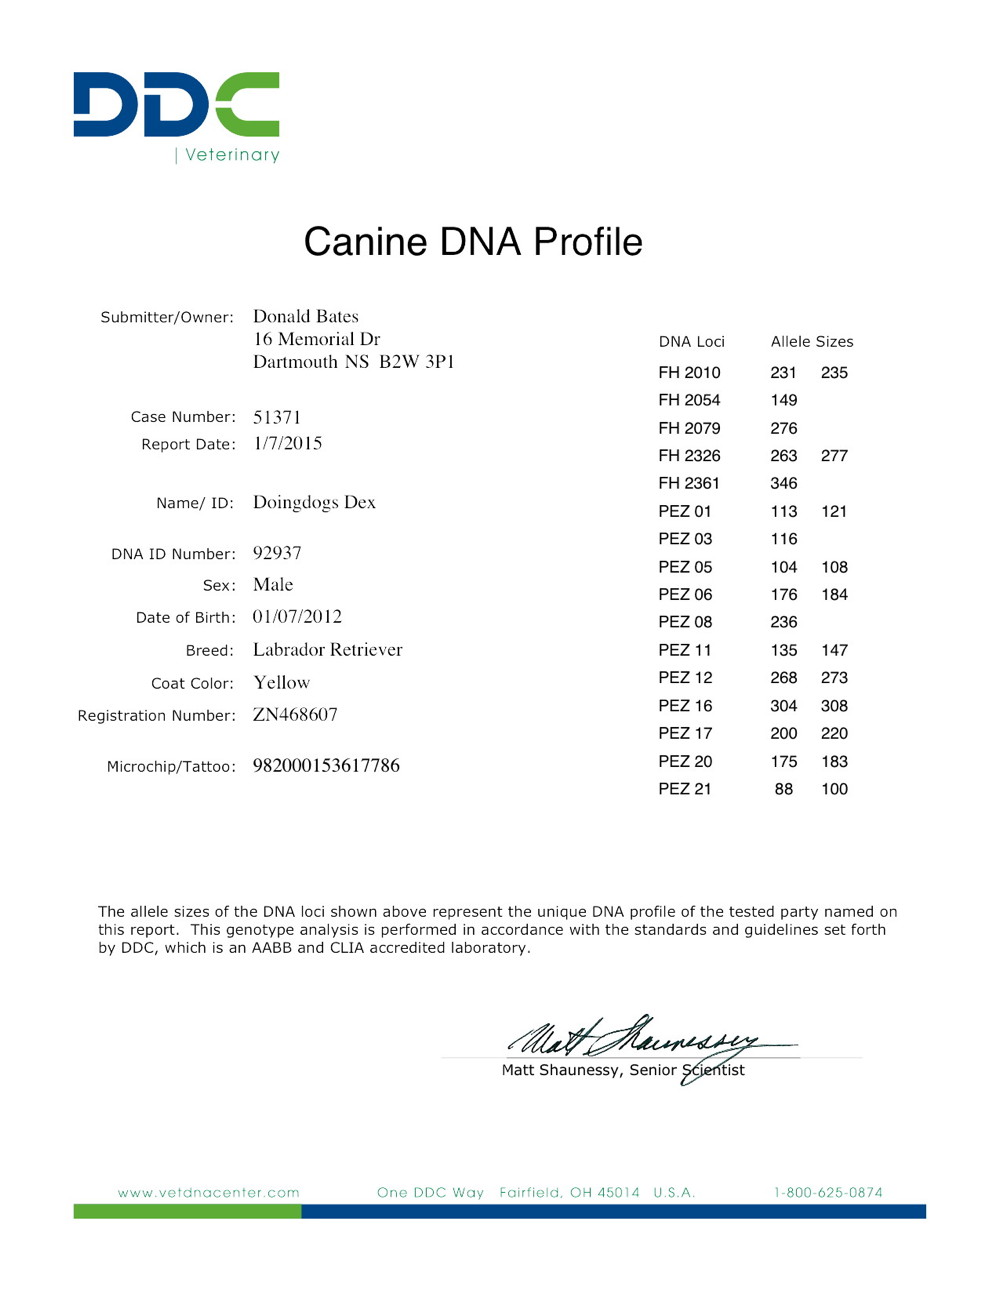 Dex's Canine DNA Profile